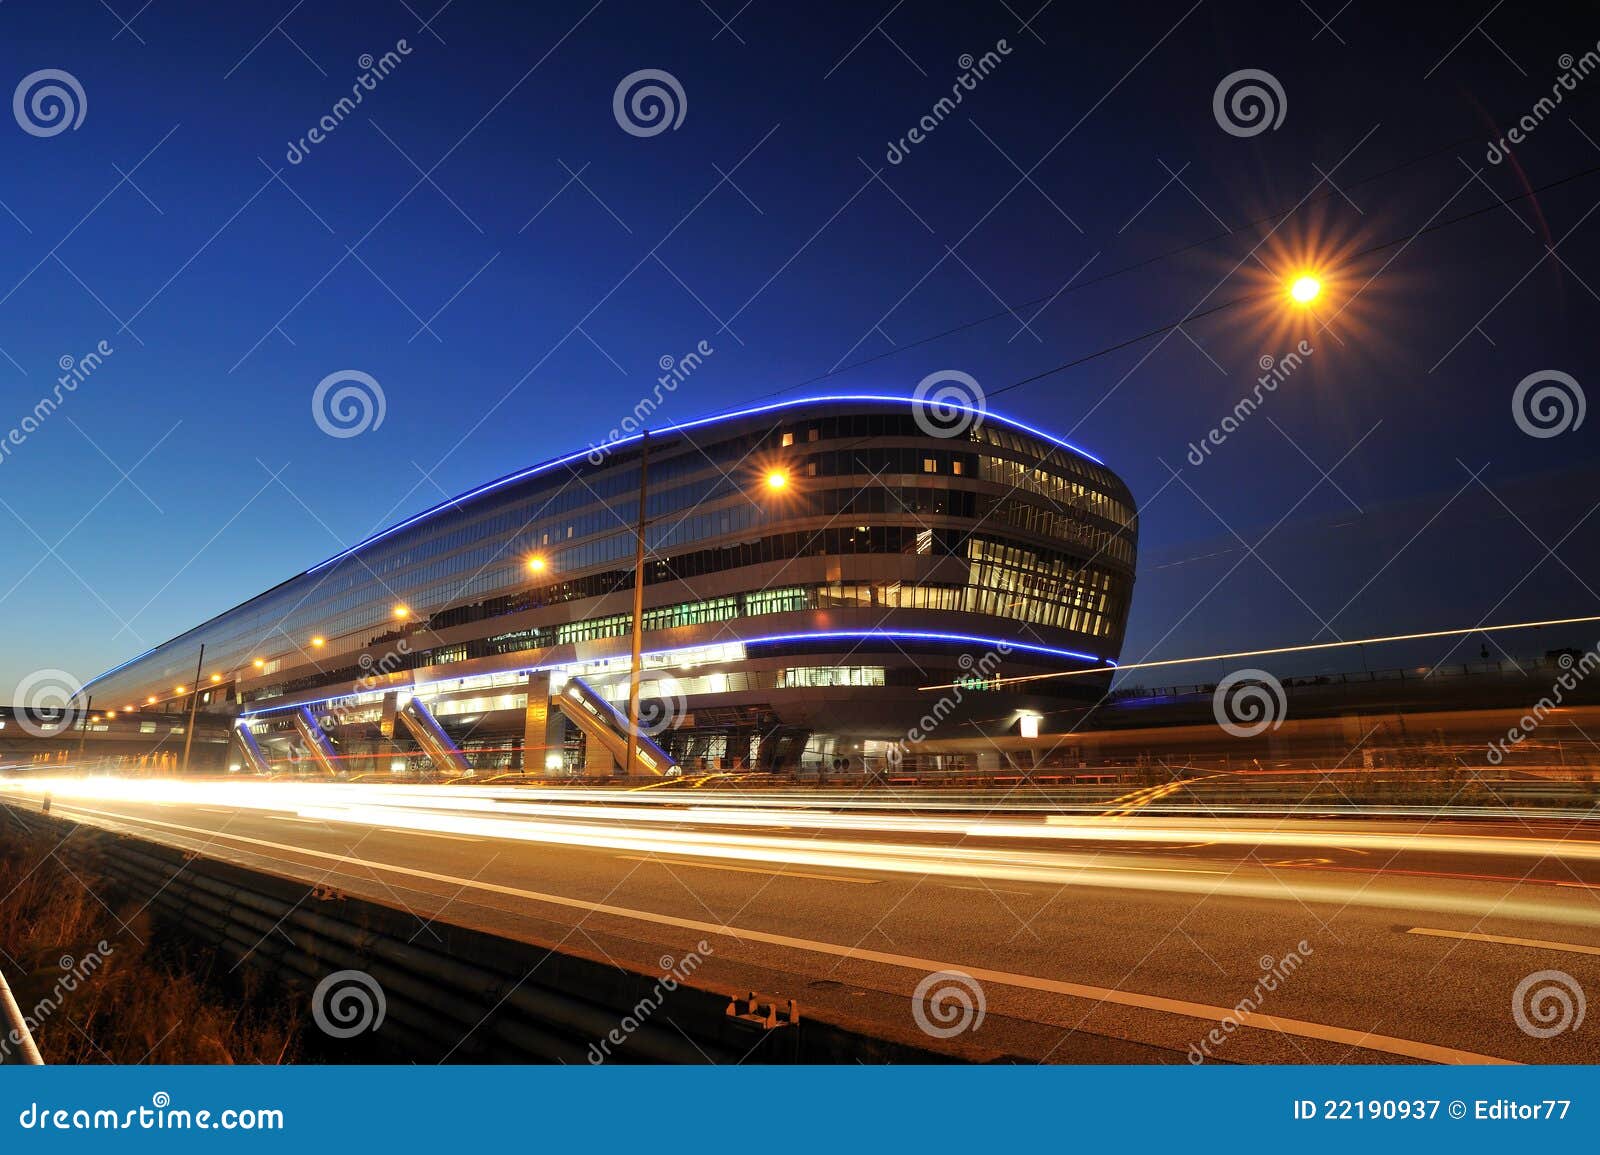 frankfurt airport train terminal in night